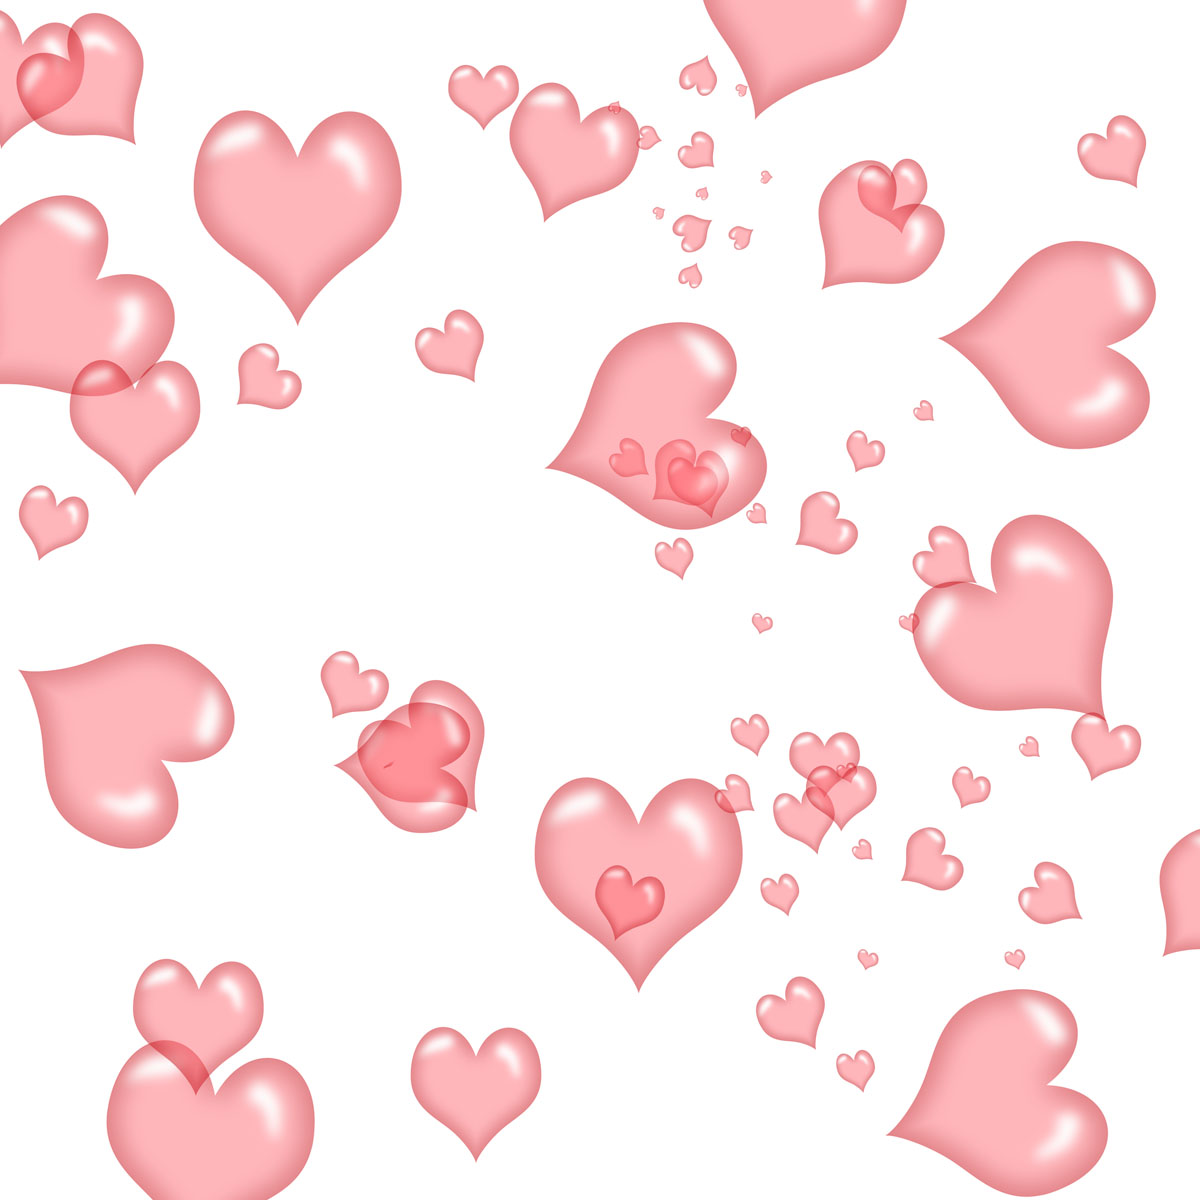 Granny Enchanted's Paper Directory: Free Pink Hearts Digital Scrapbook Paper1200 x 1200